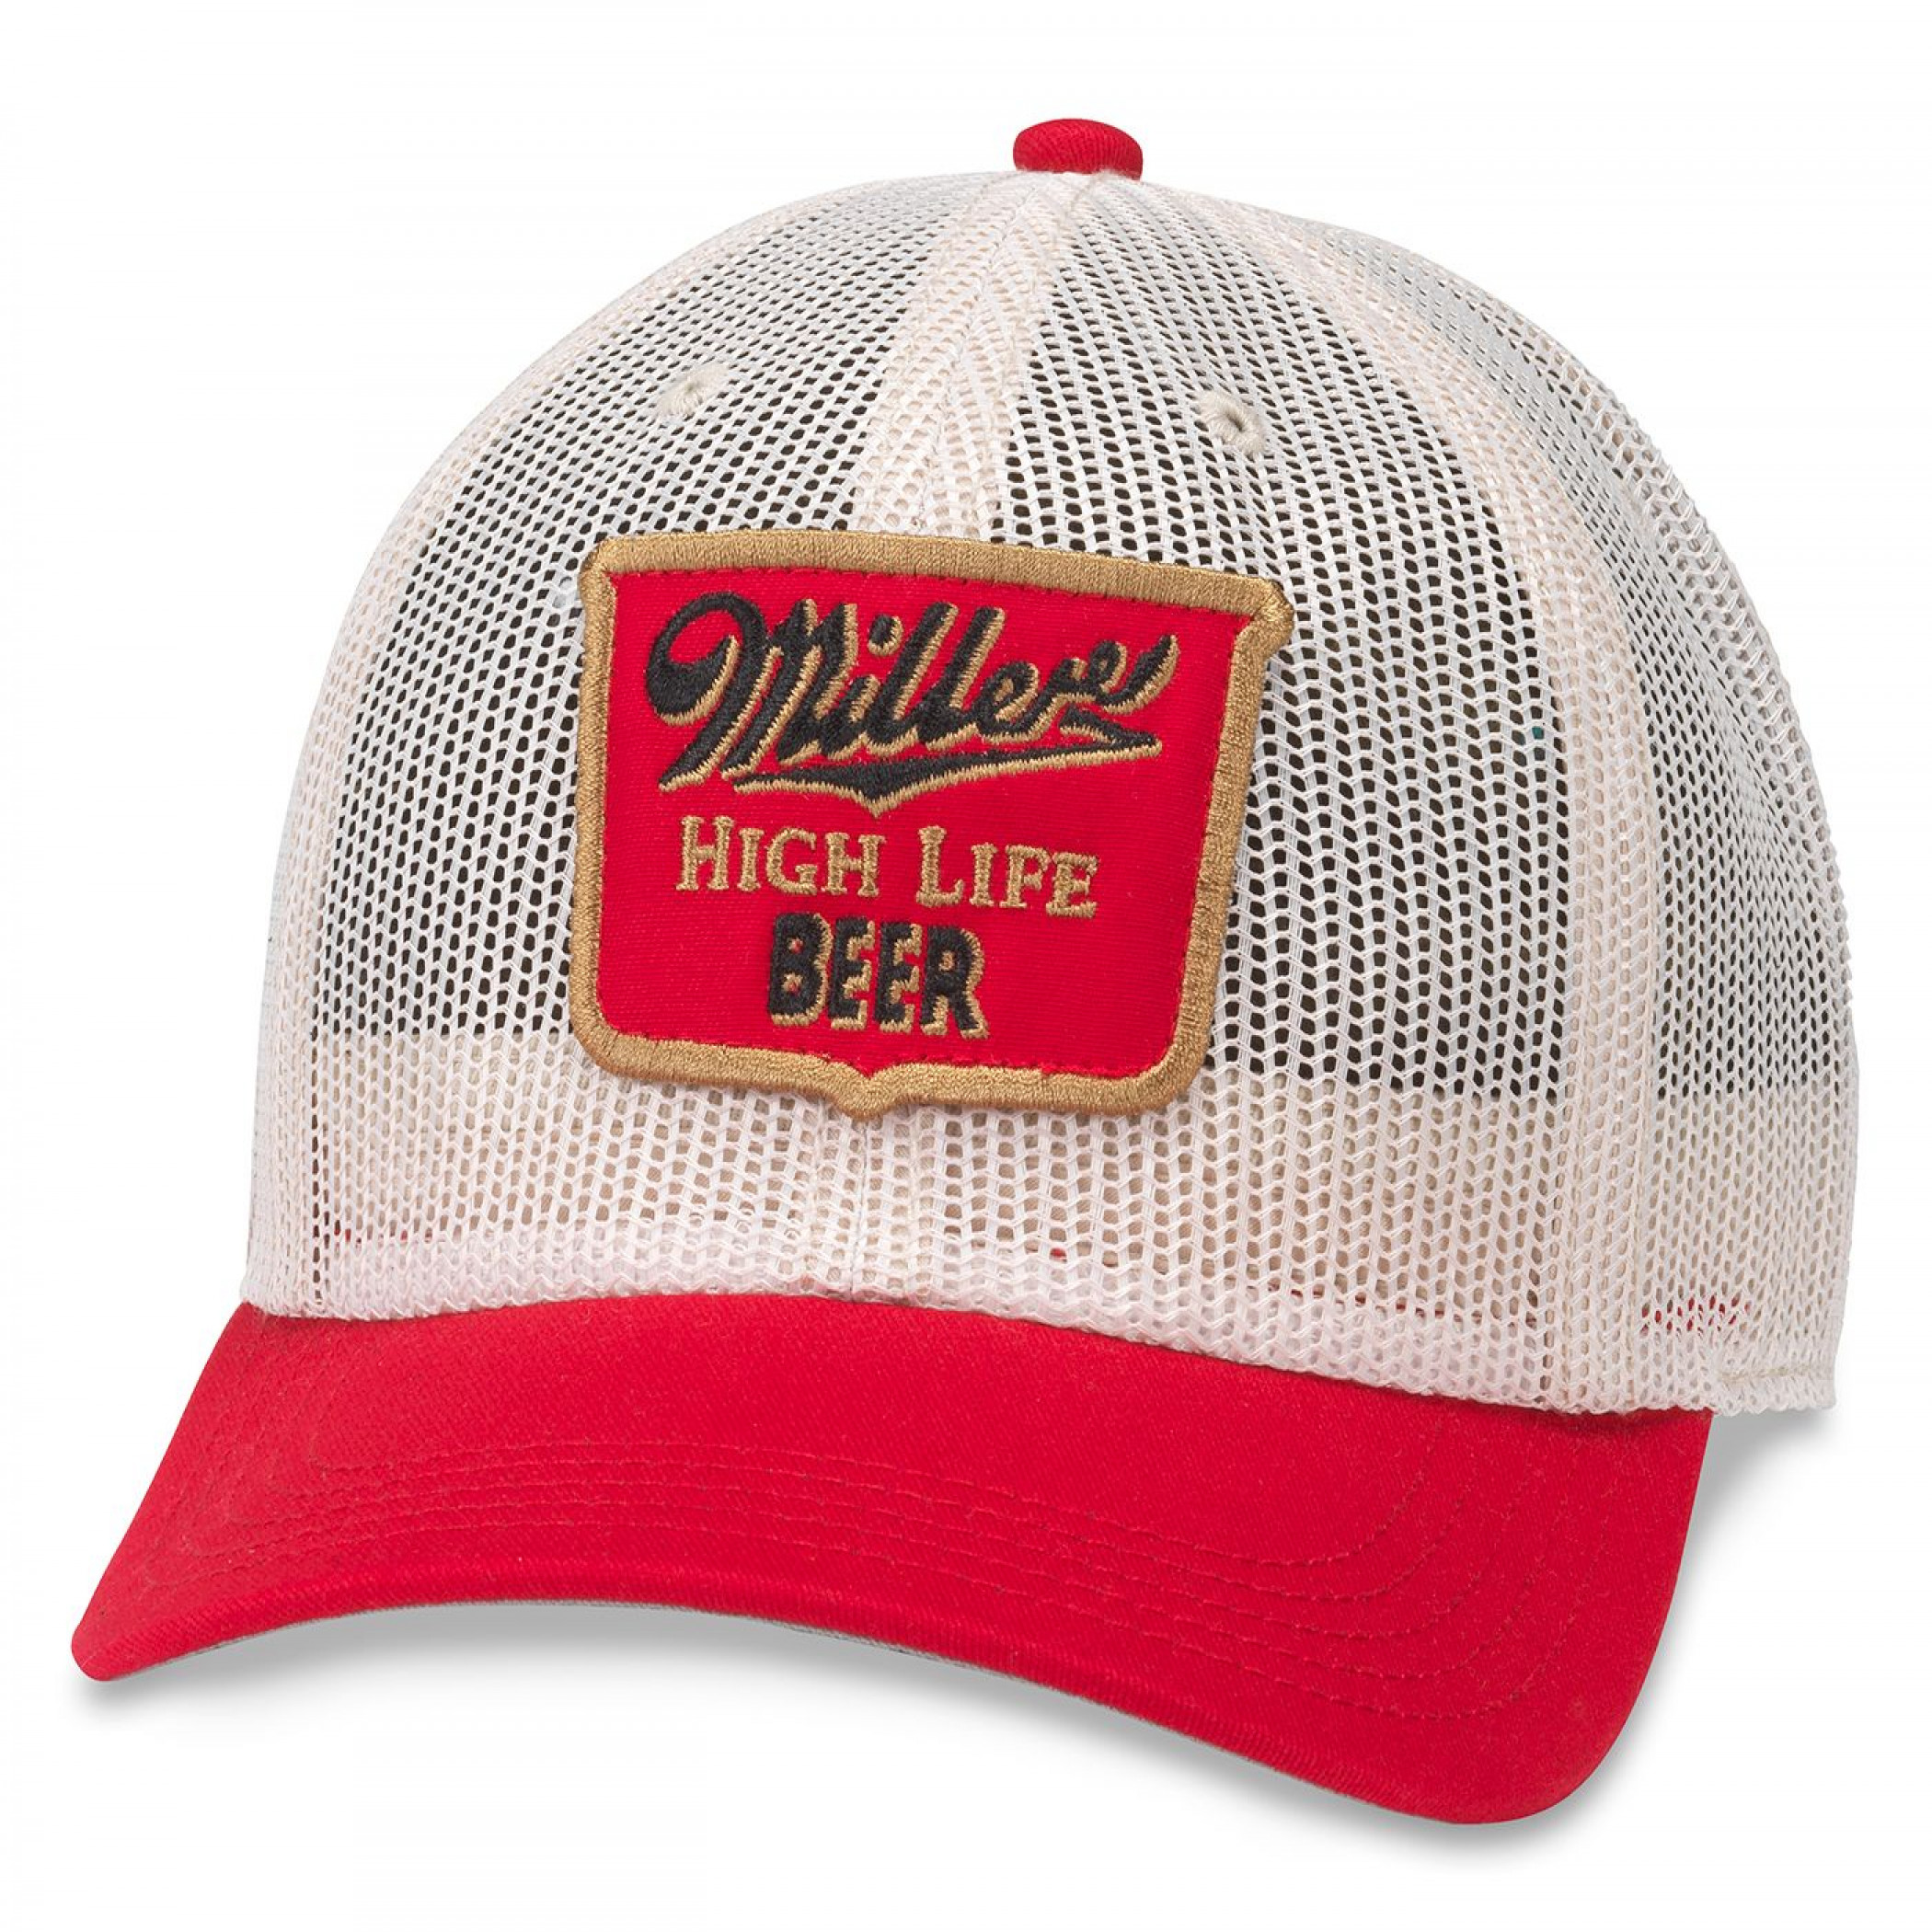 Miller High Life Beer Tucker Style Hat